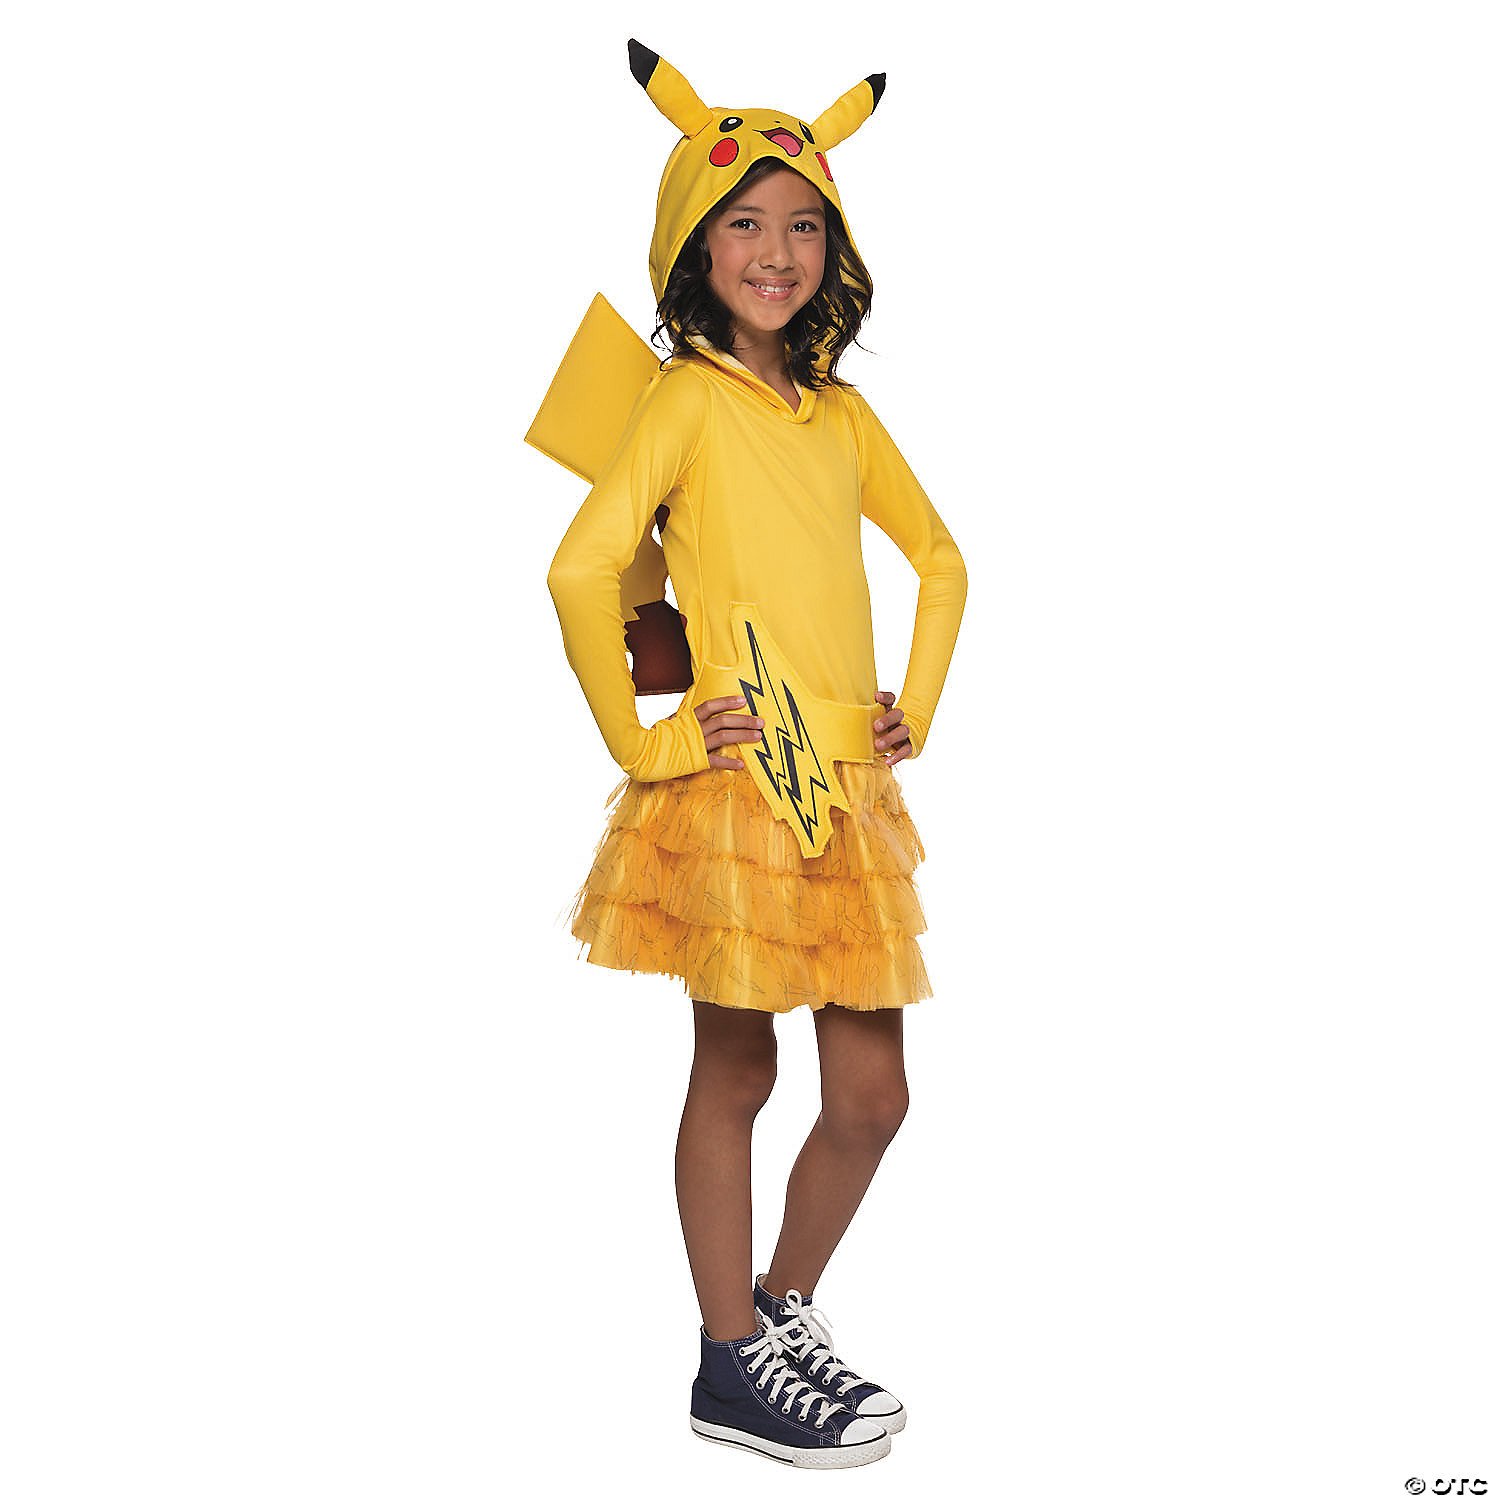 Pikachu Wedding: Wedding Dress Pikachu (Female) Plush - 8 In.